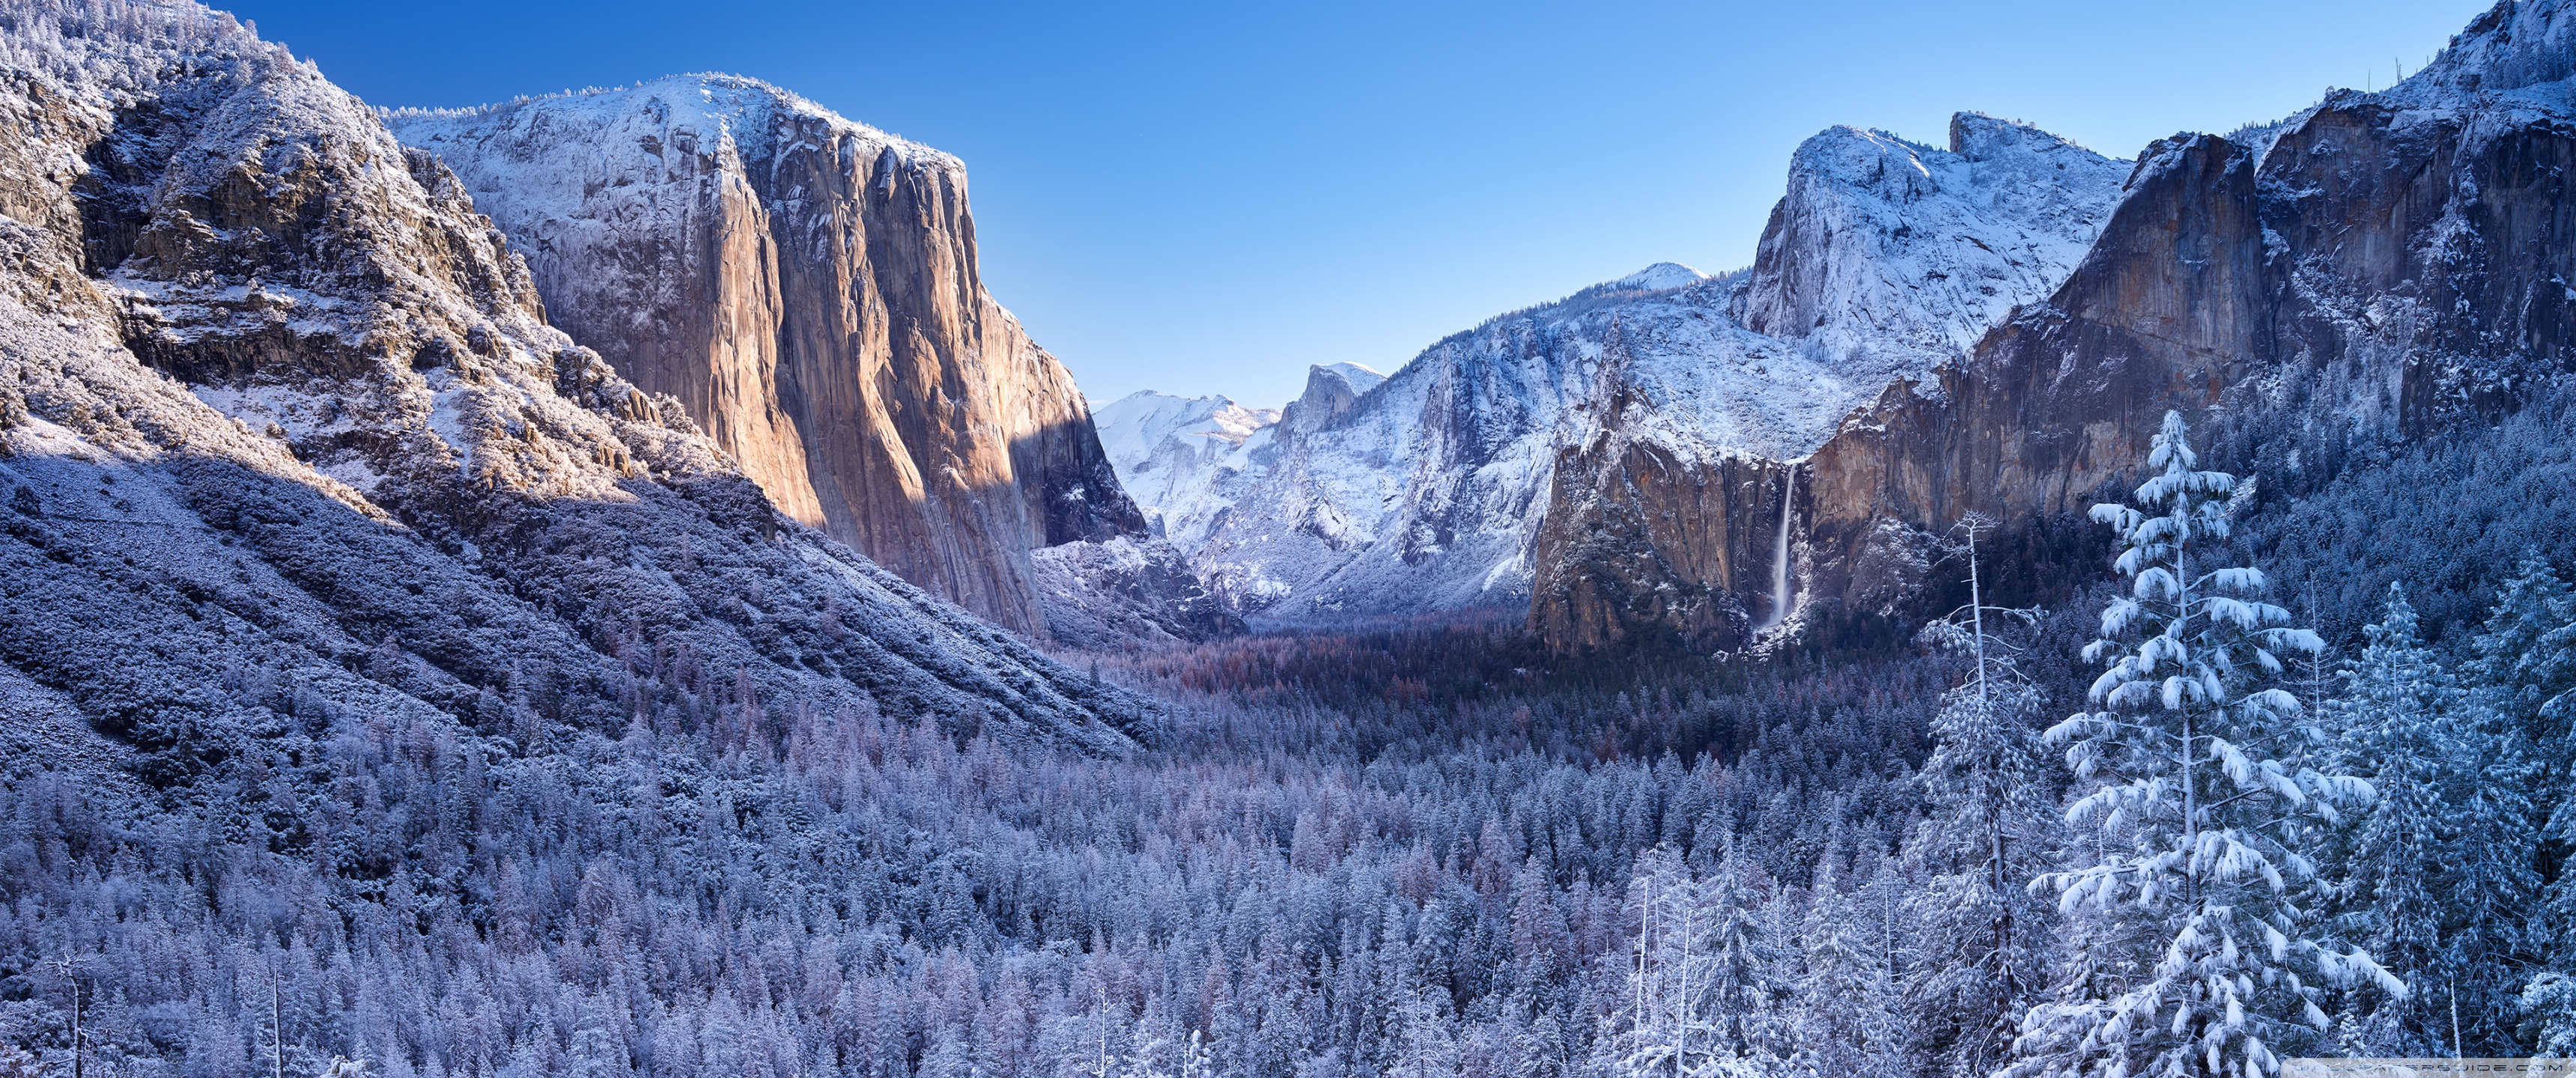 Yosemite Winter Photography Ultra HD Desktop Background Wallpaper for: Widescreen & UltraWide Desktop & Laptop, Multi Display, Dual Monitor, Tablet